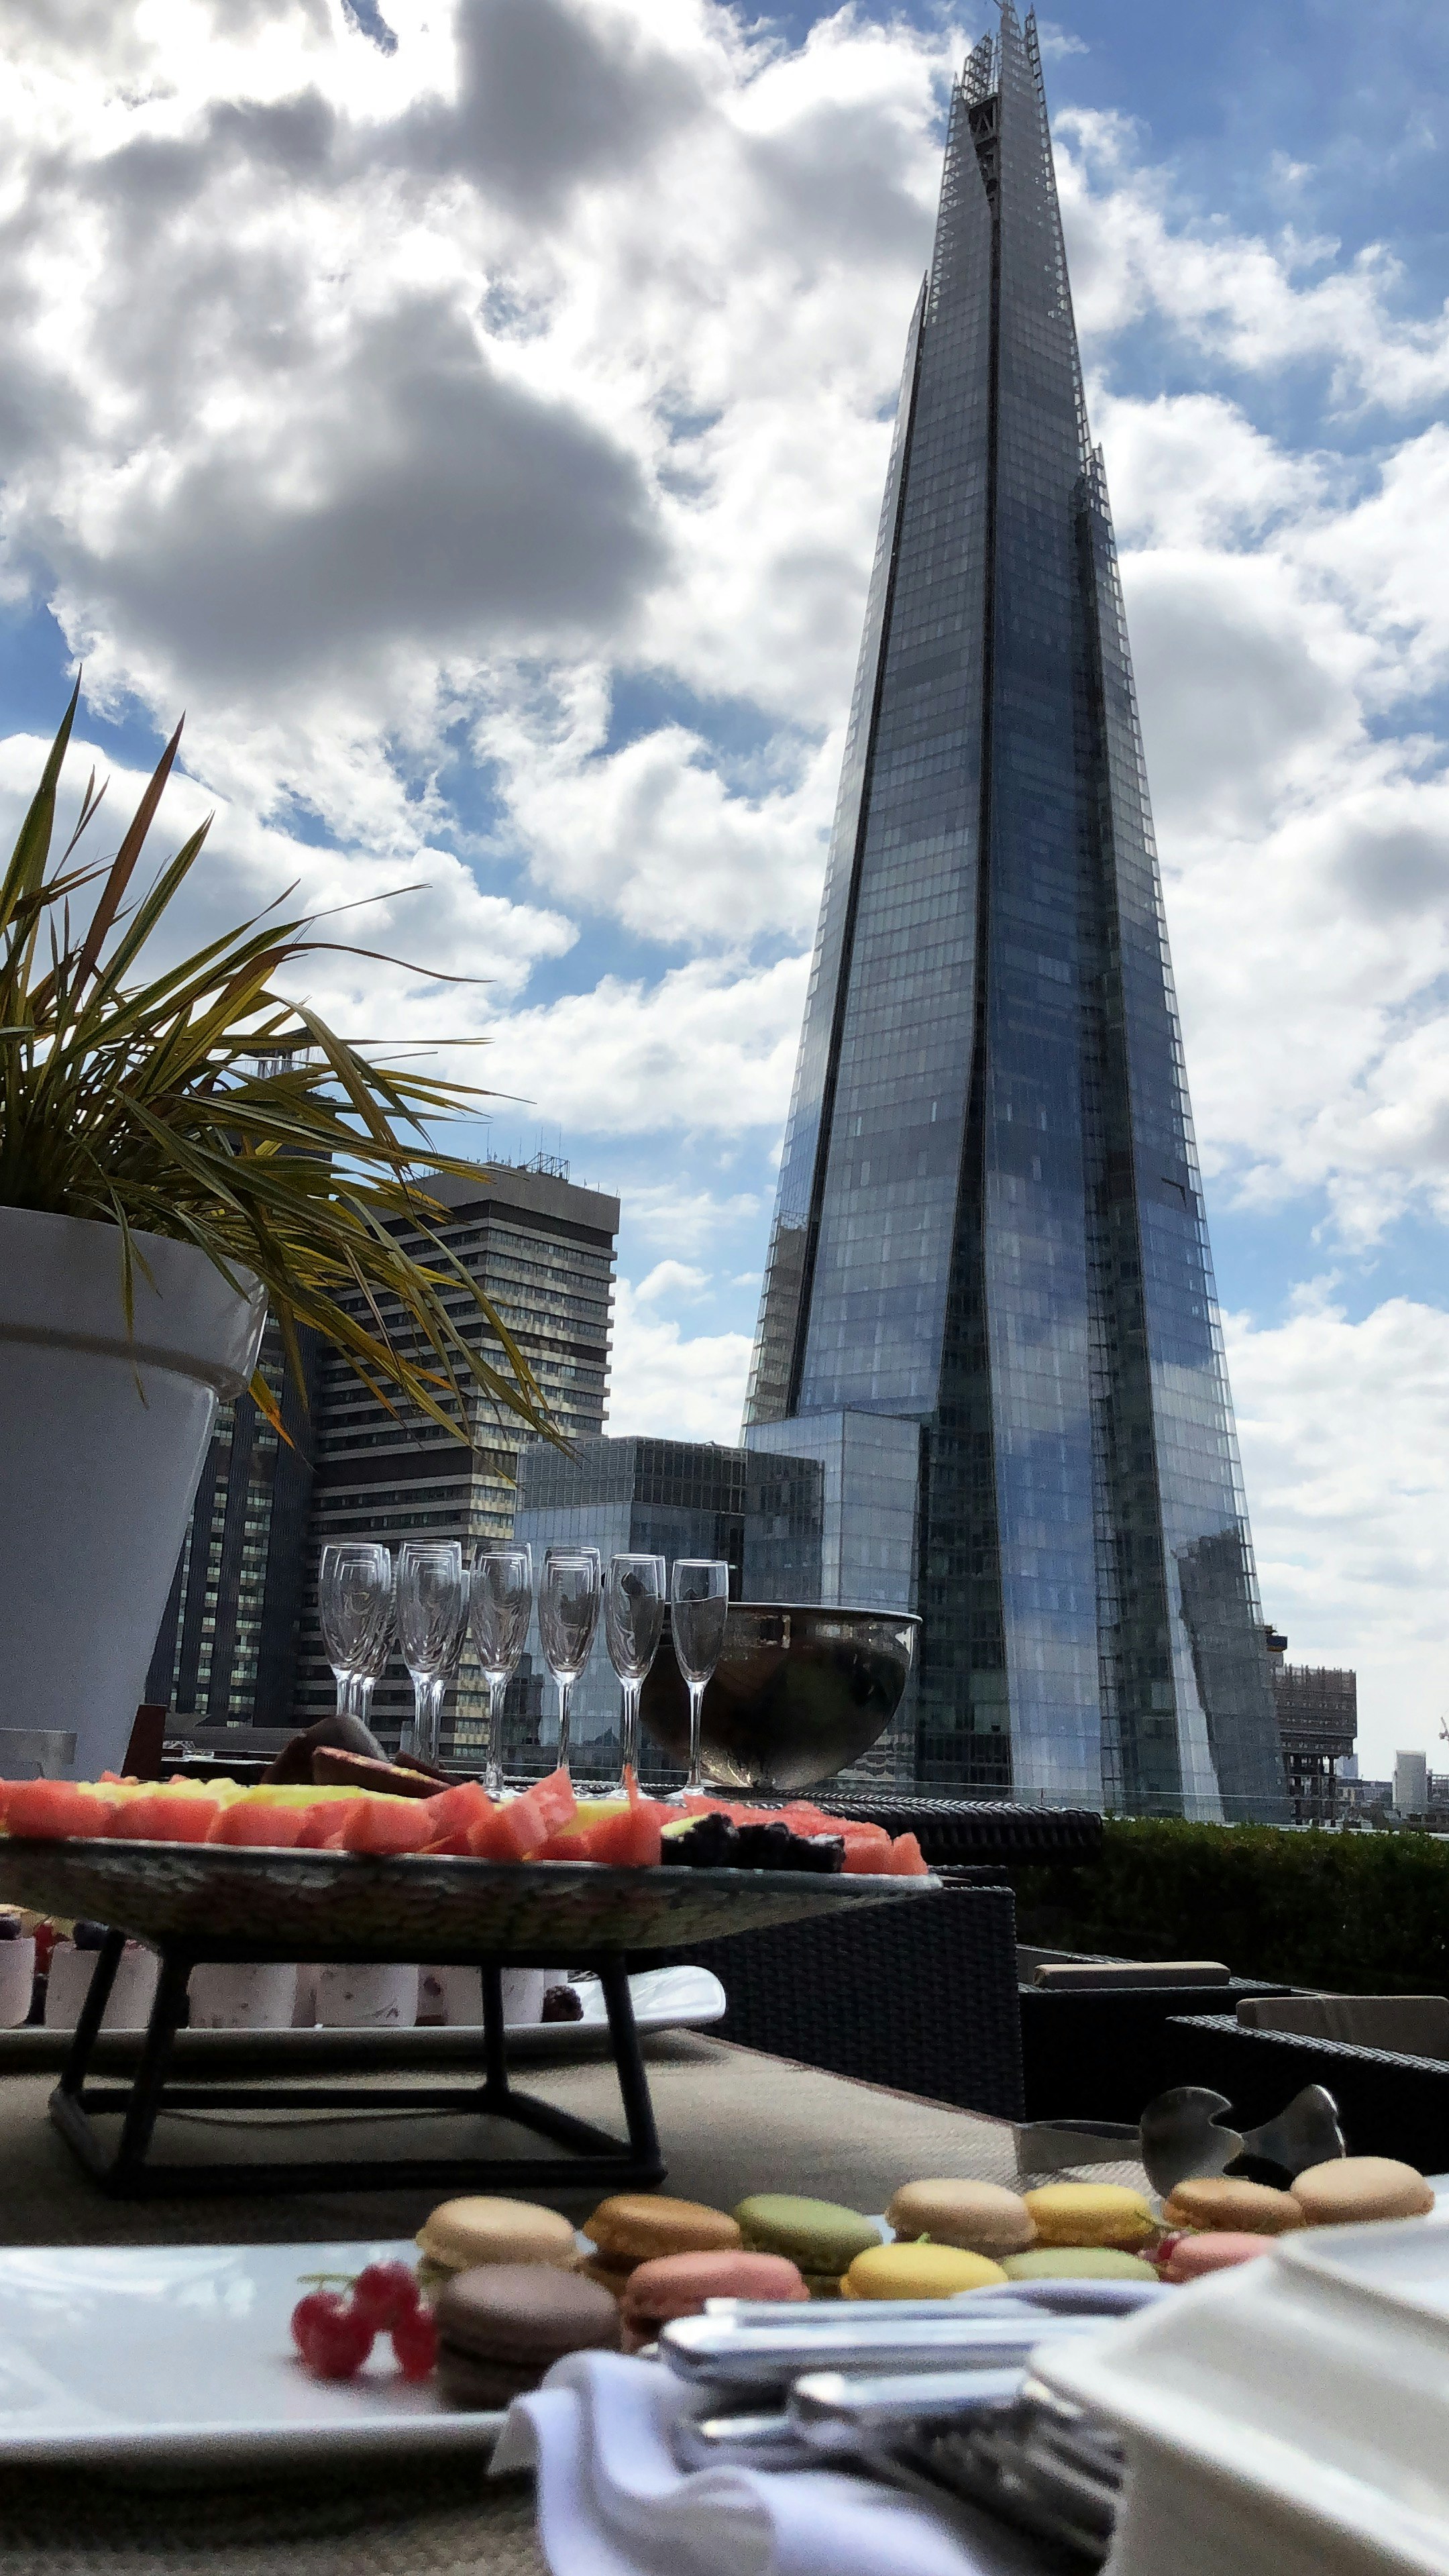 Hilton London Tower Bridge - Executive City Terrace image 2